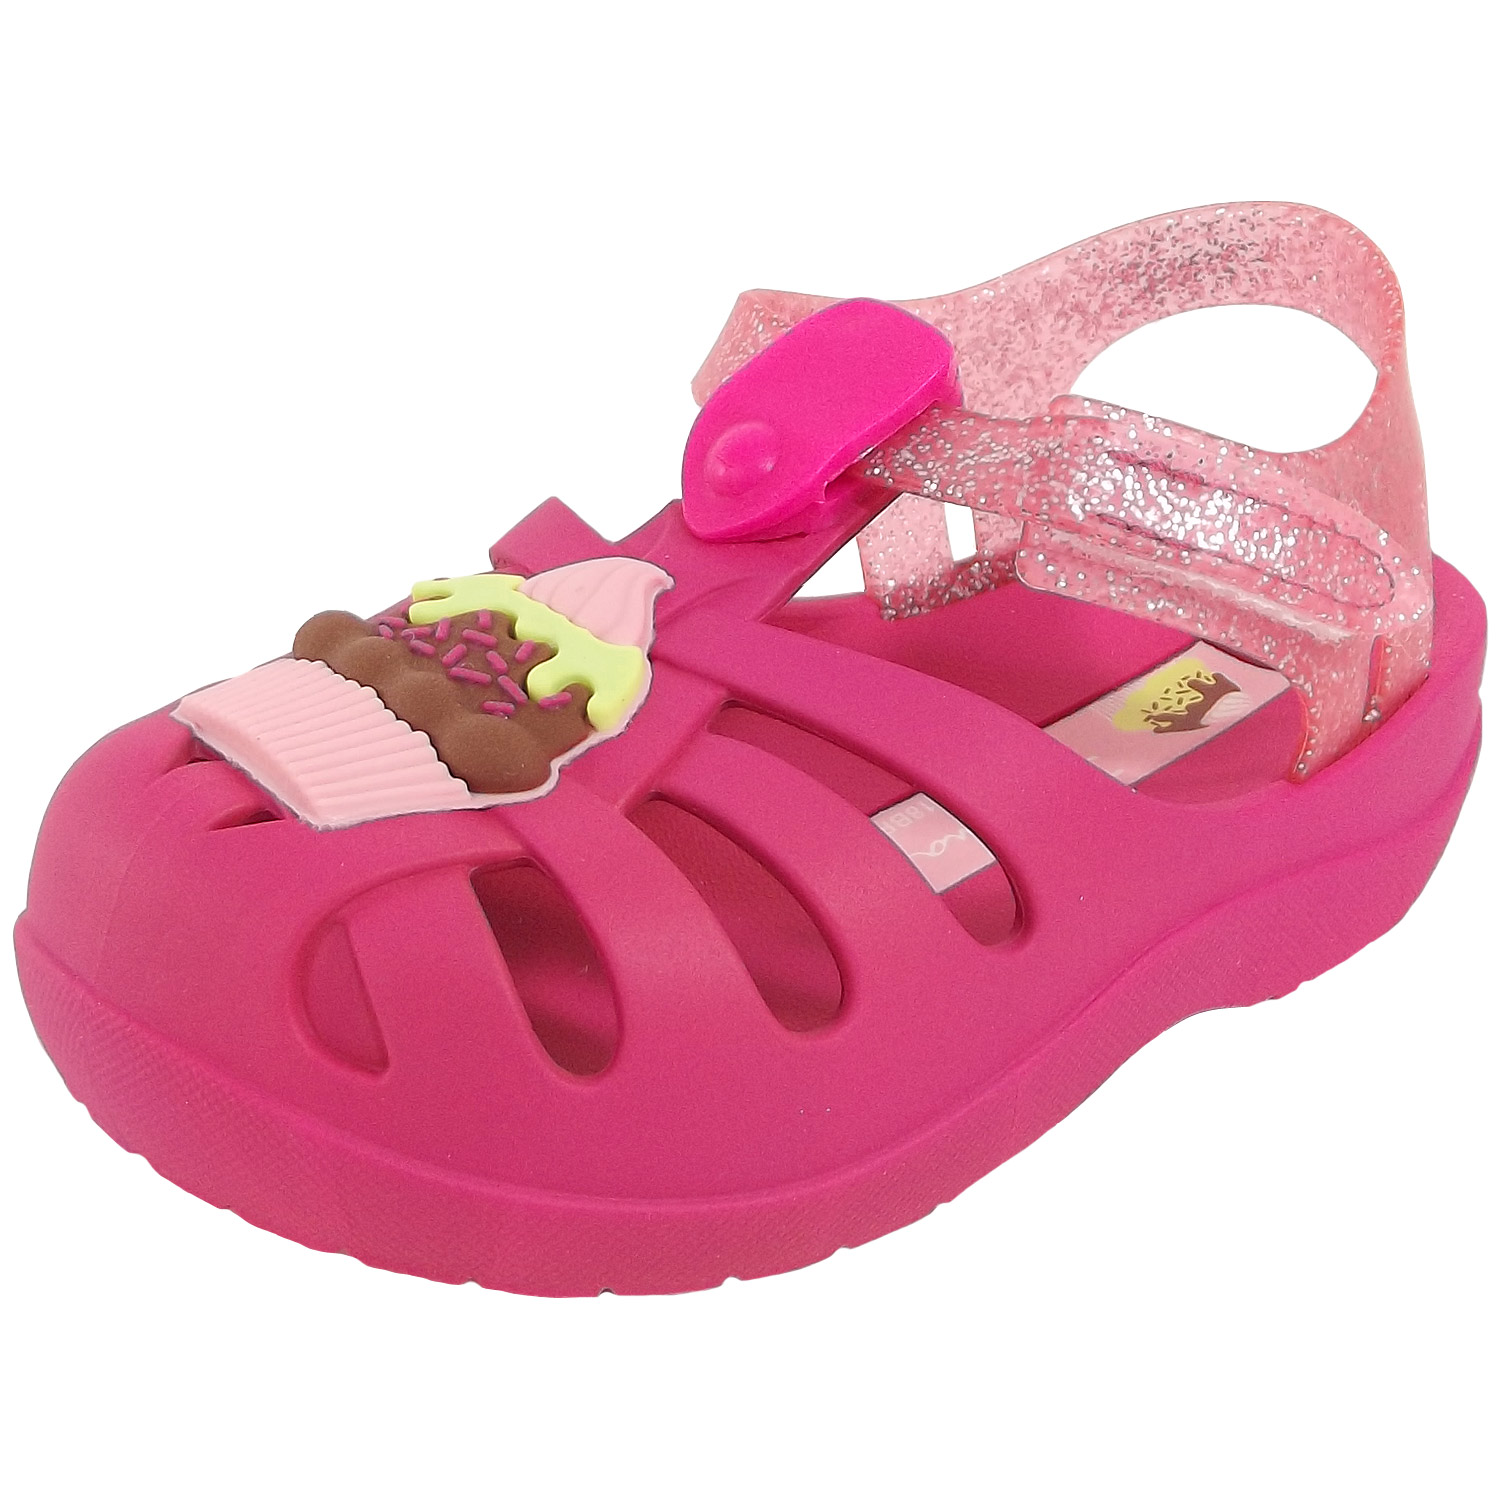 ipanema summer baby sandal